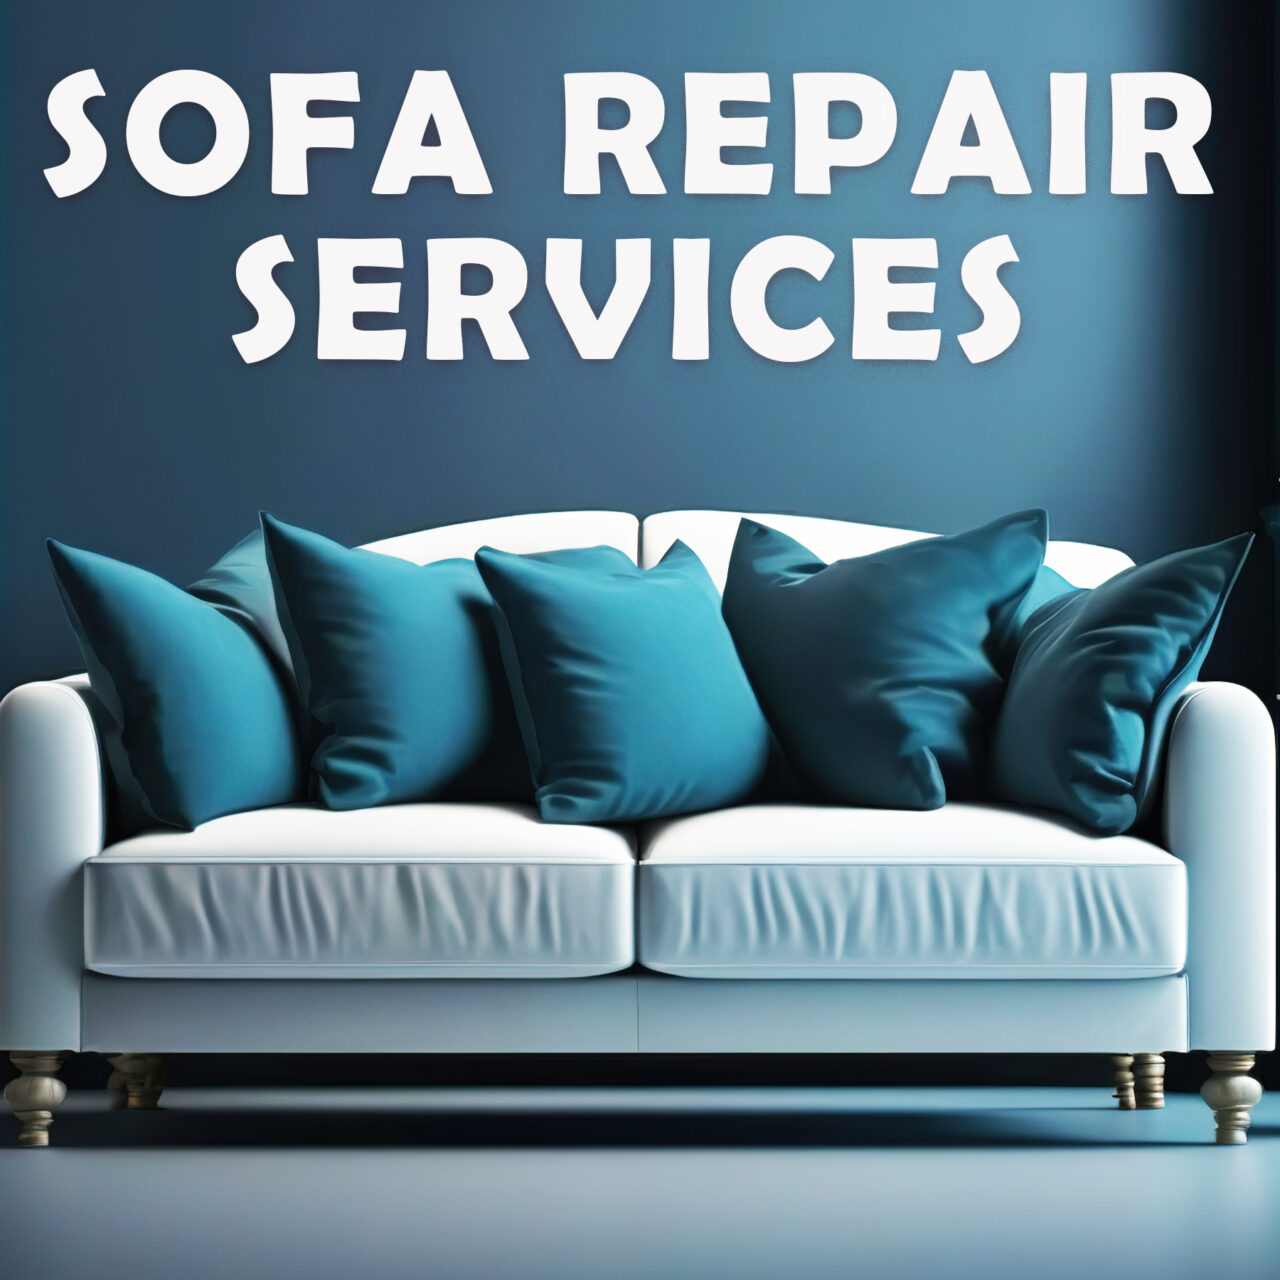 Sofa Repair Services 1280x1280 